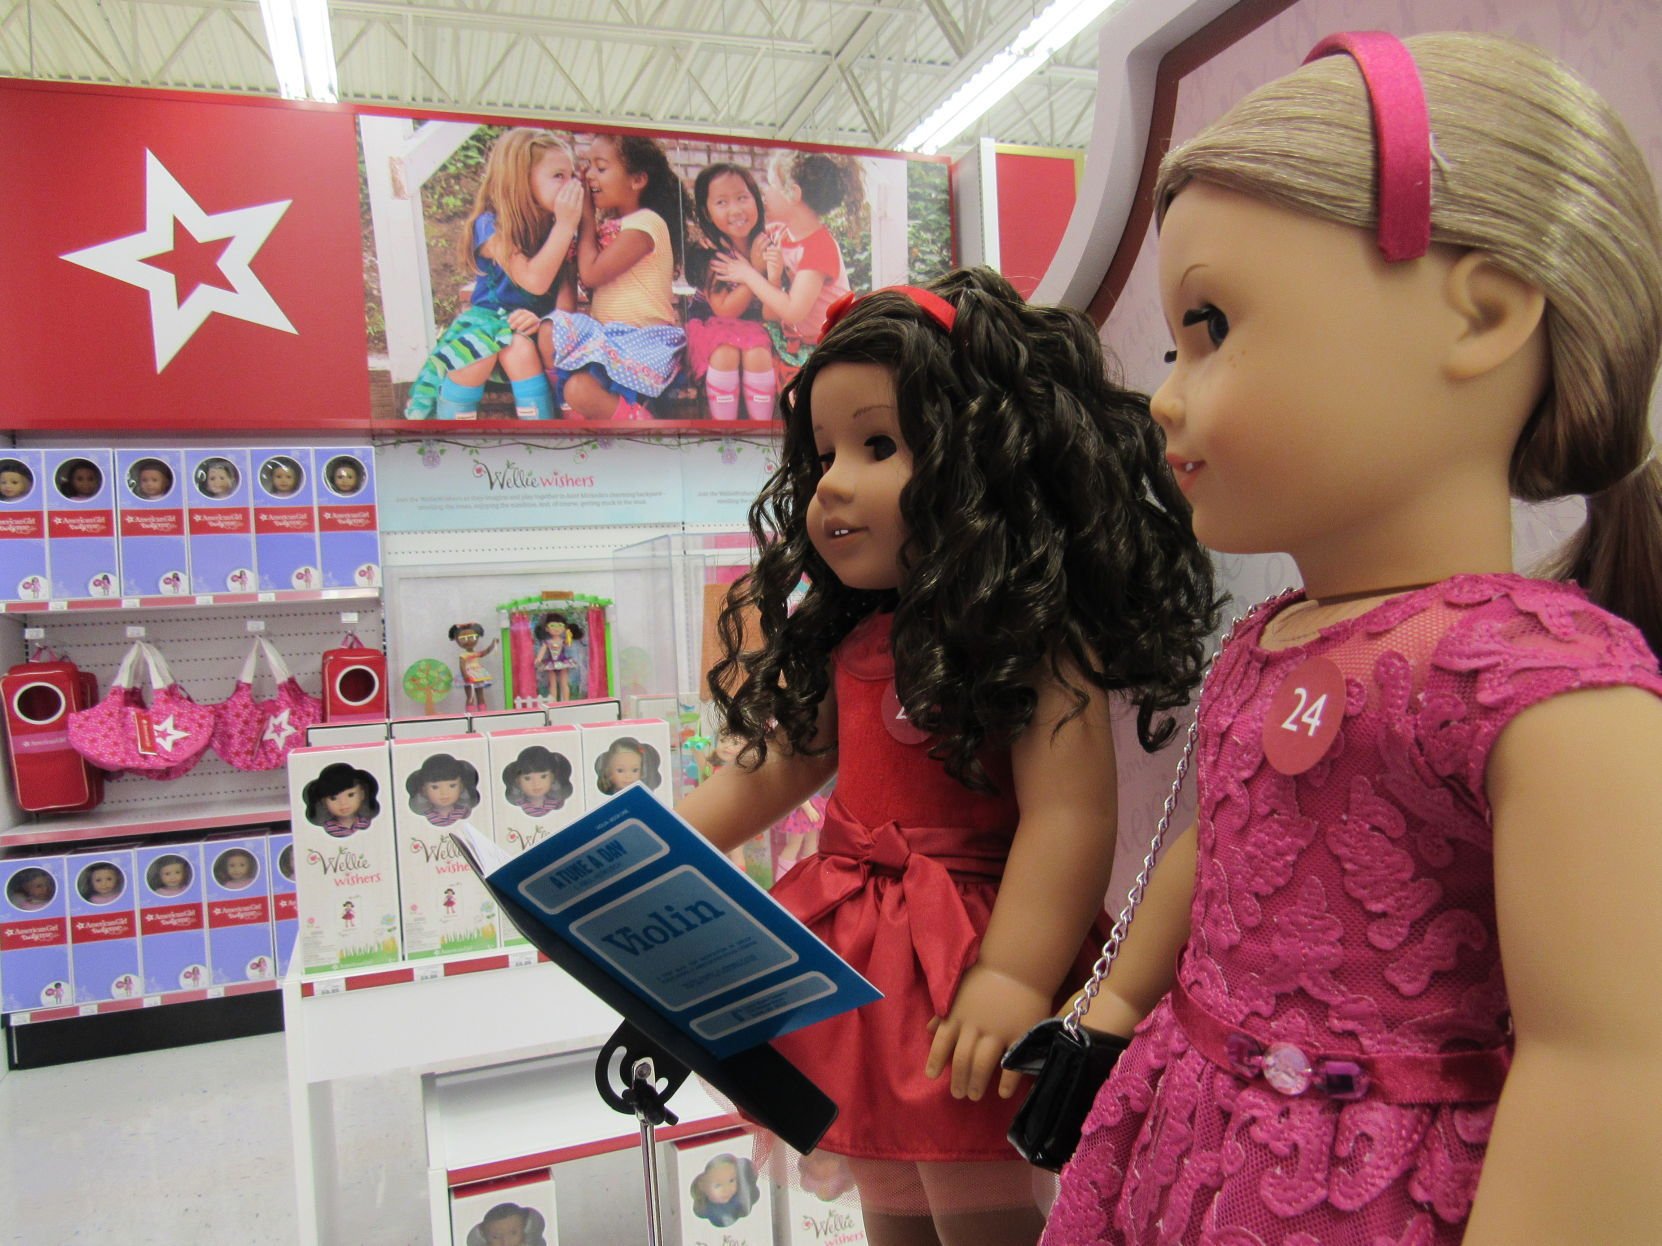 american girl doll quality decline